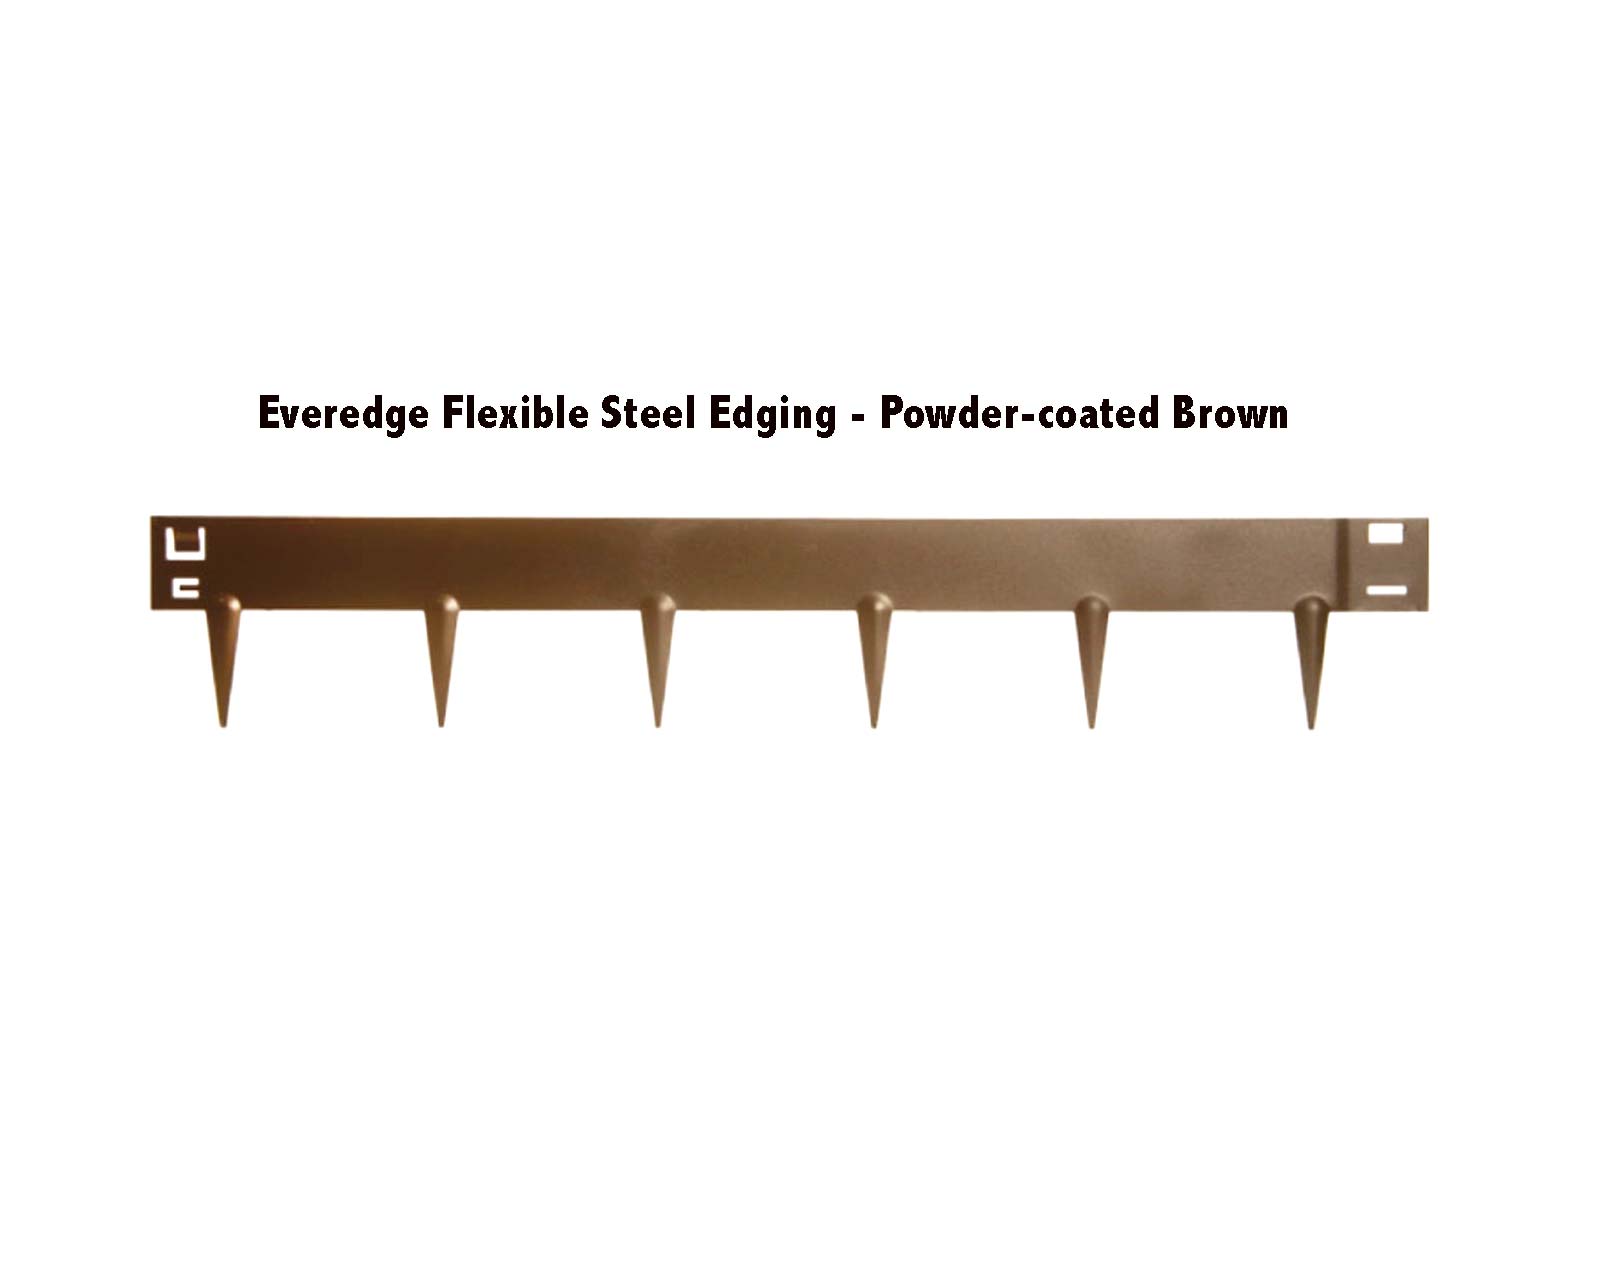 Everedge Flexible Steel Powder-coated edging in Brown